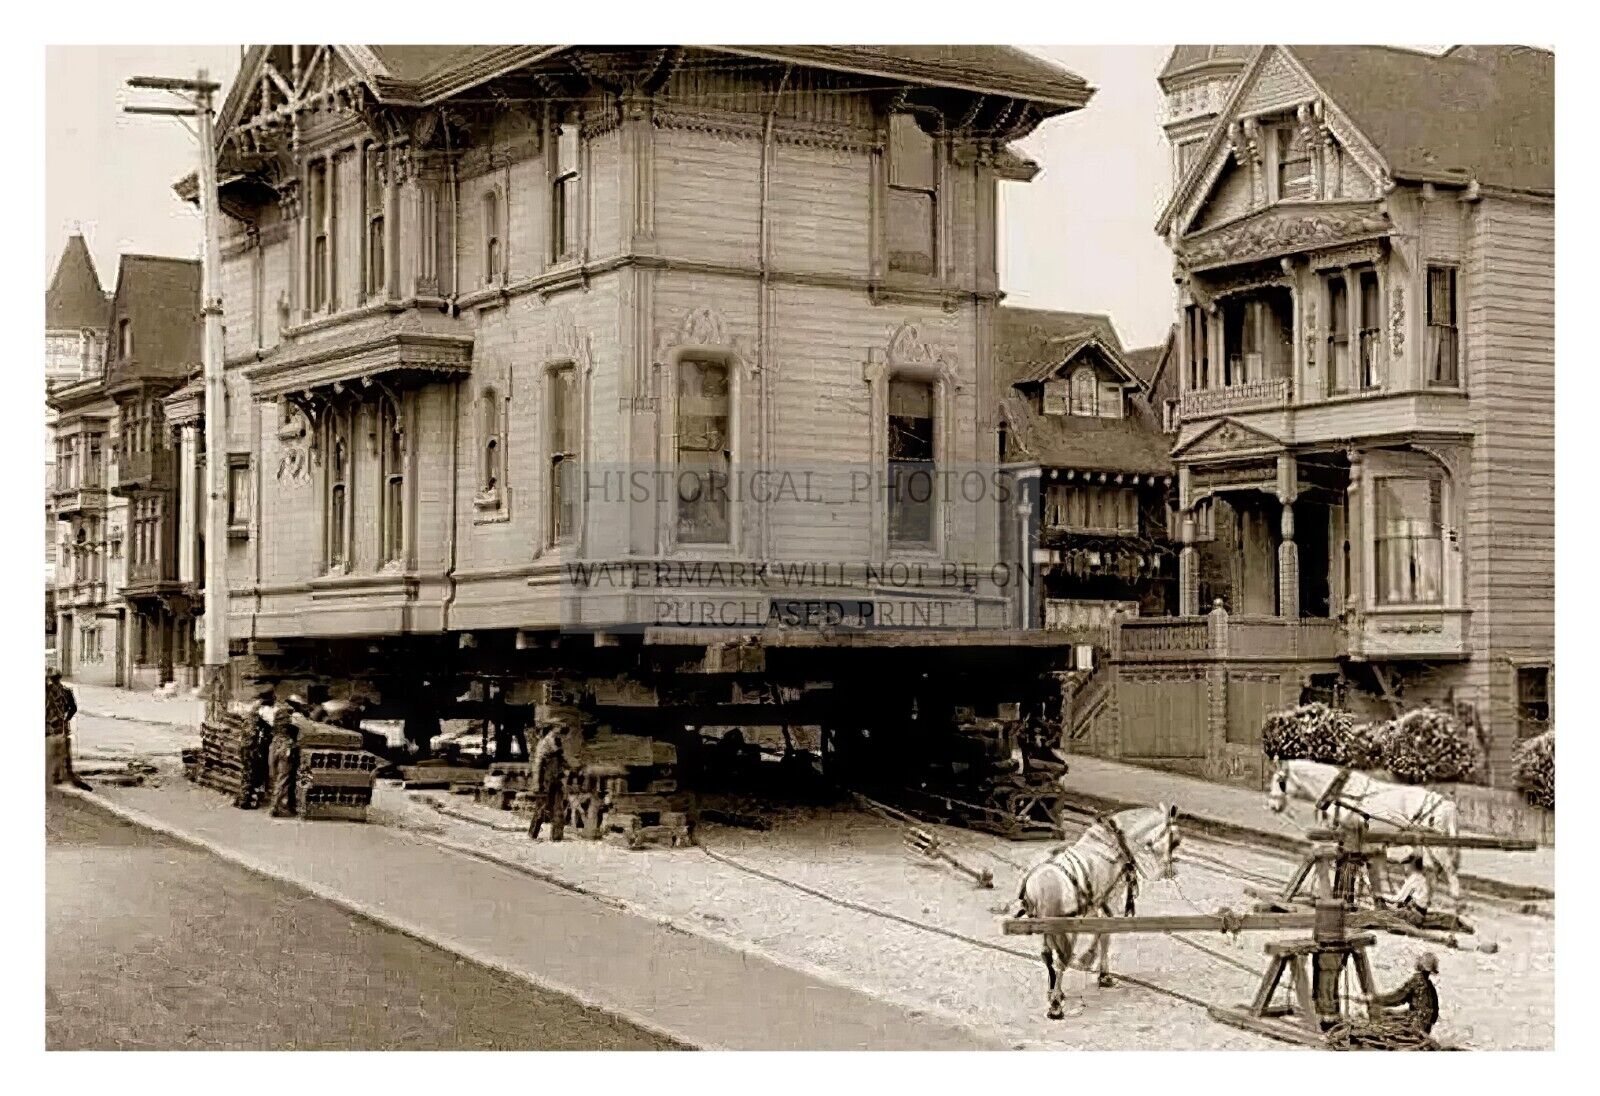 HORSES MOVING HOUSE SAN FRANCISCO CALIFORNIA 1908 4X6 PHOTO